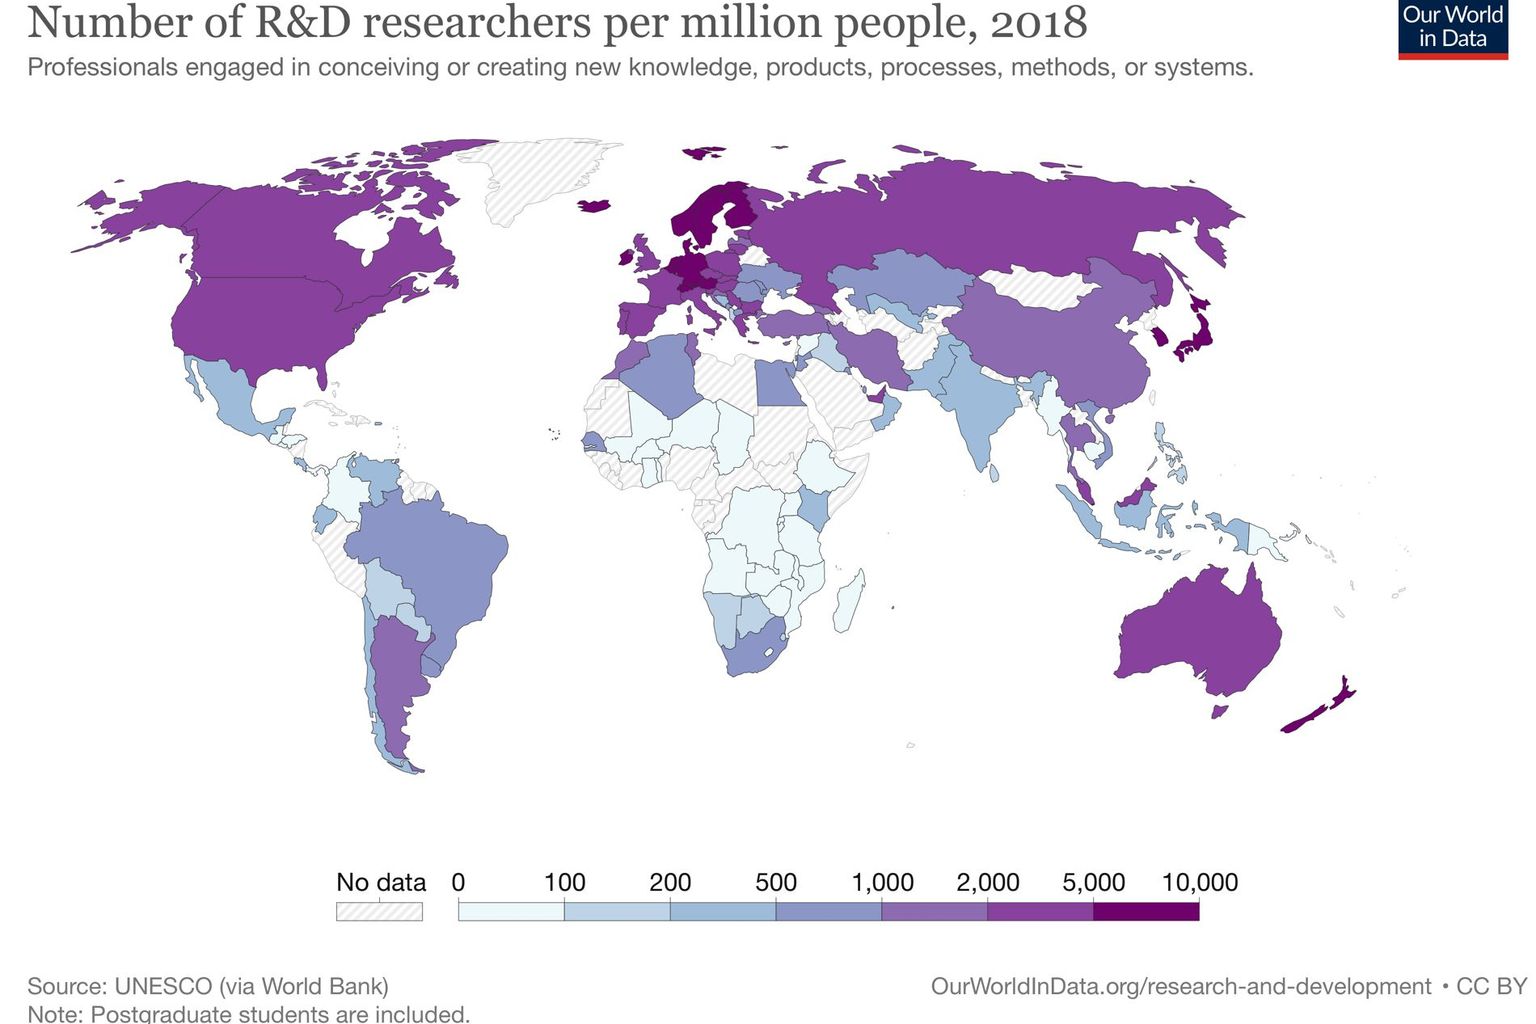 Researchers in RnD per Million People